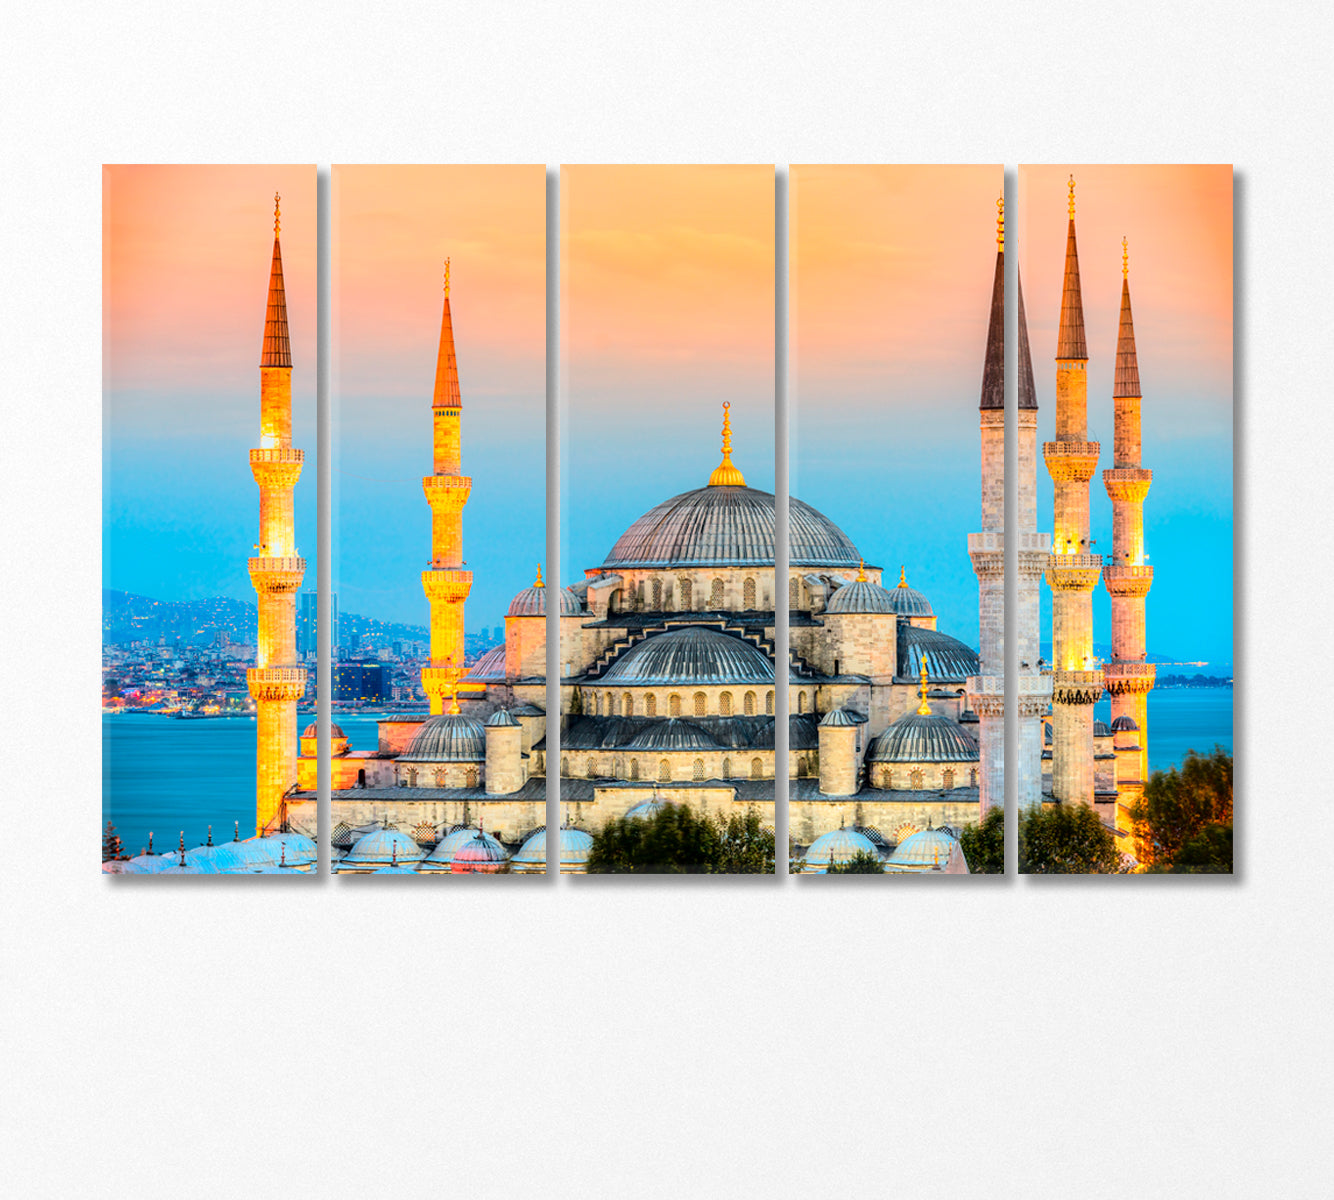 Blue Mosque Istanbul Turkey Canvas Print-Canvas Print-CetArt-5 Panels-36x24 inches-CetArt